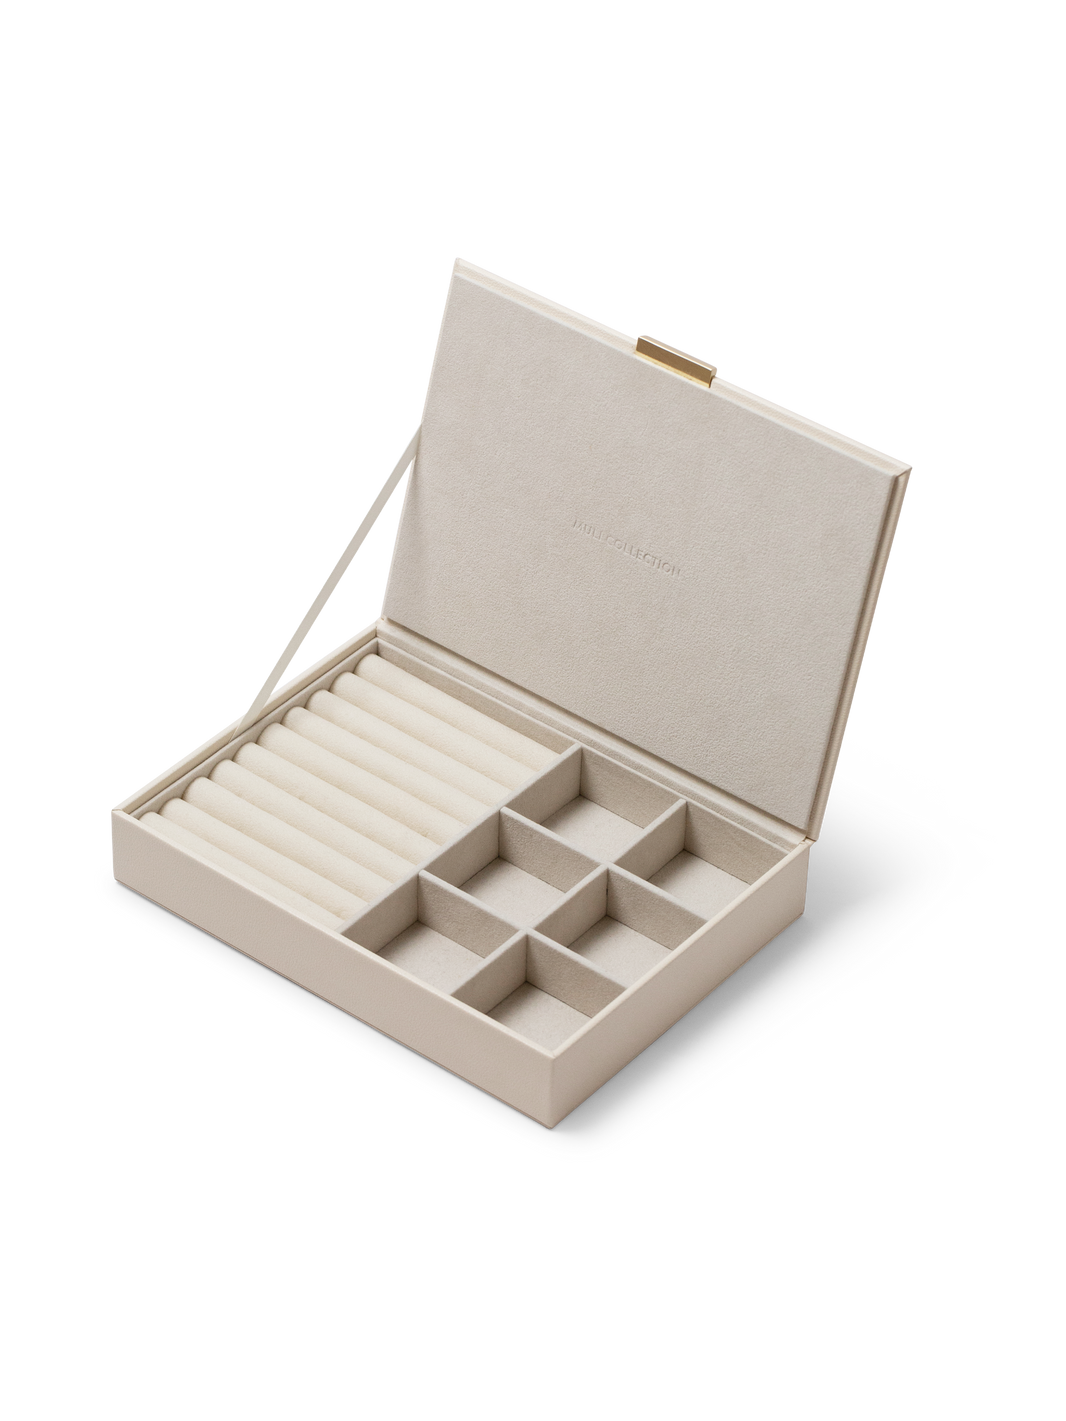 Jewelry box in beige made in vegan leather